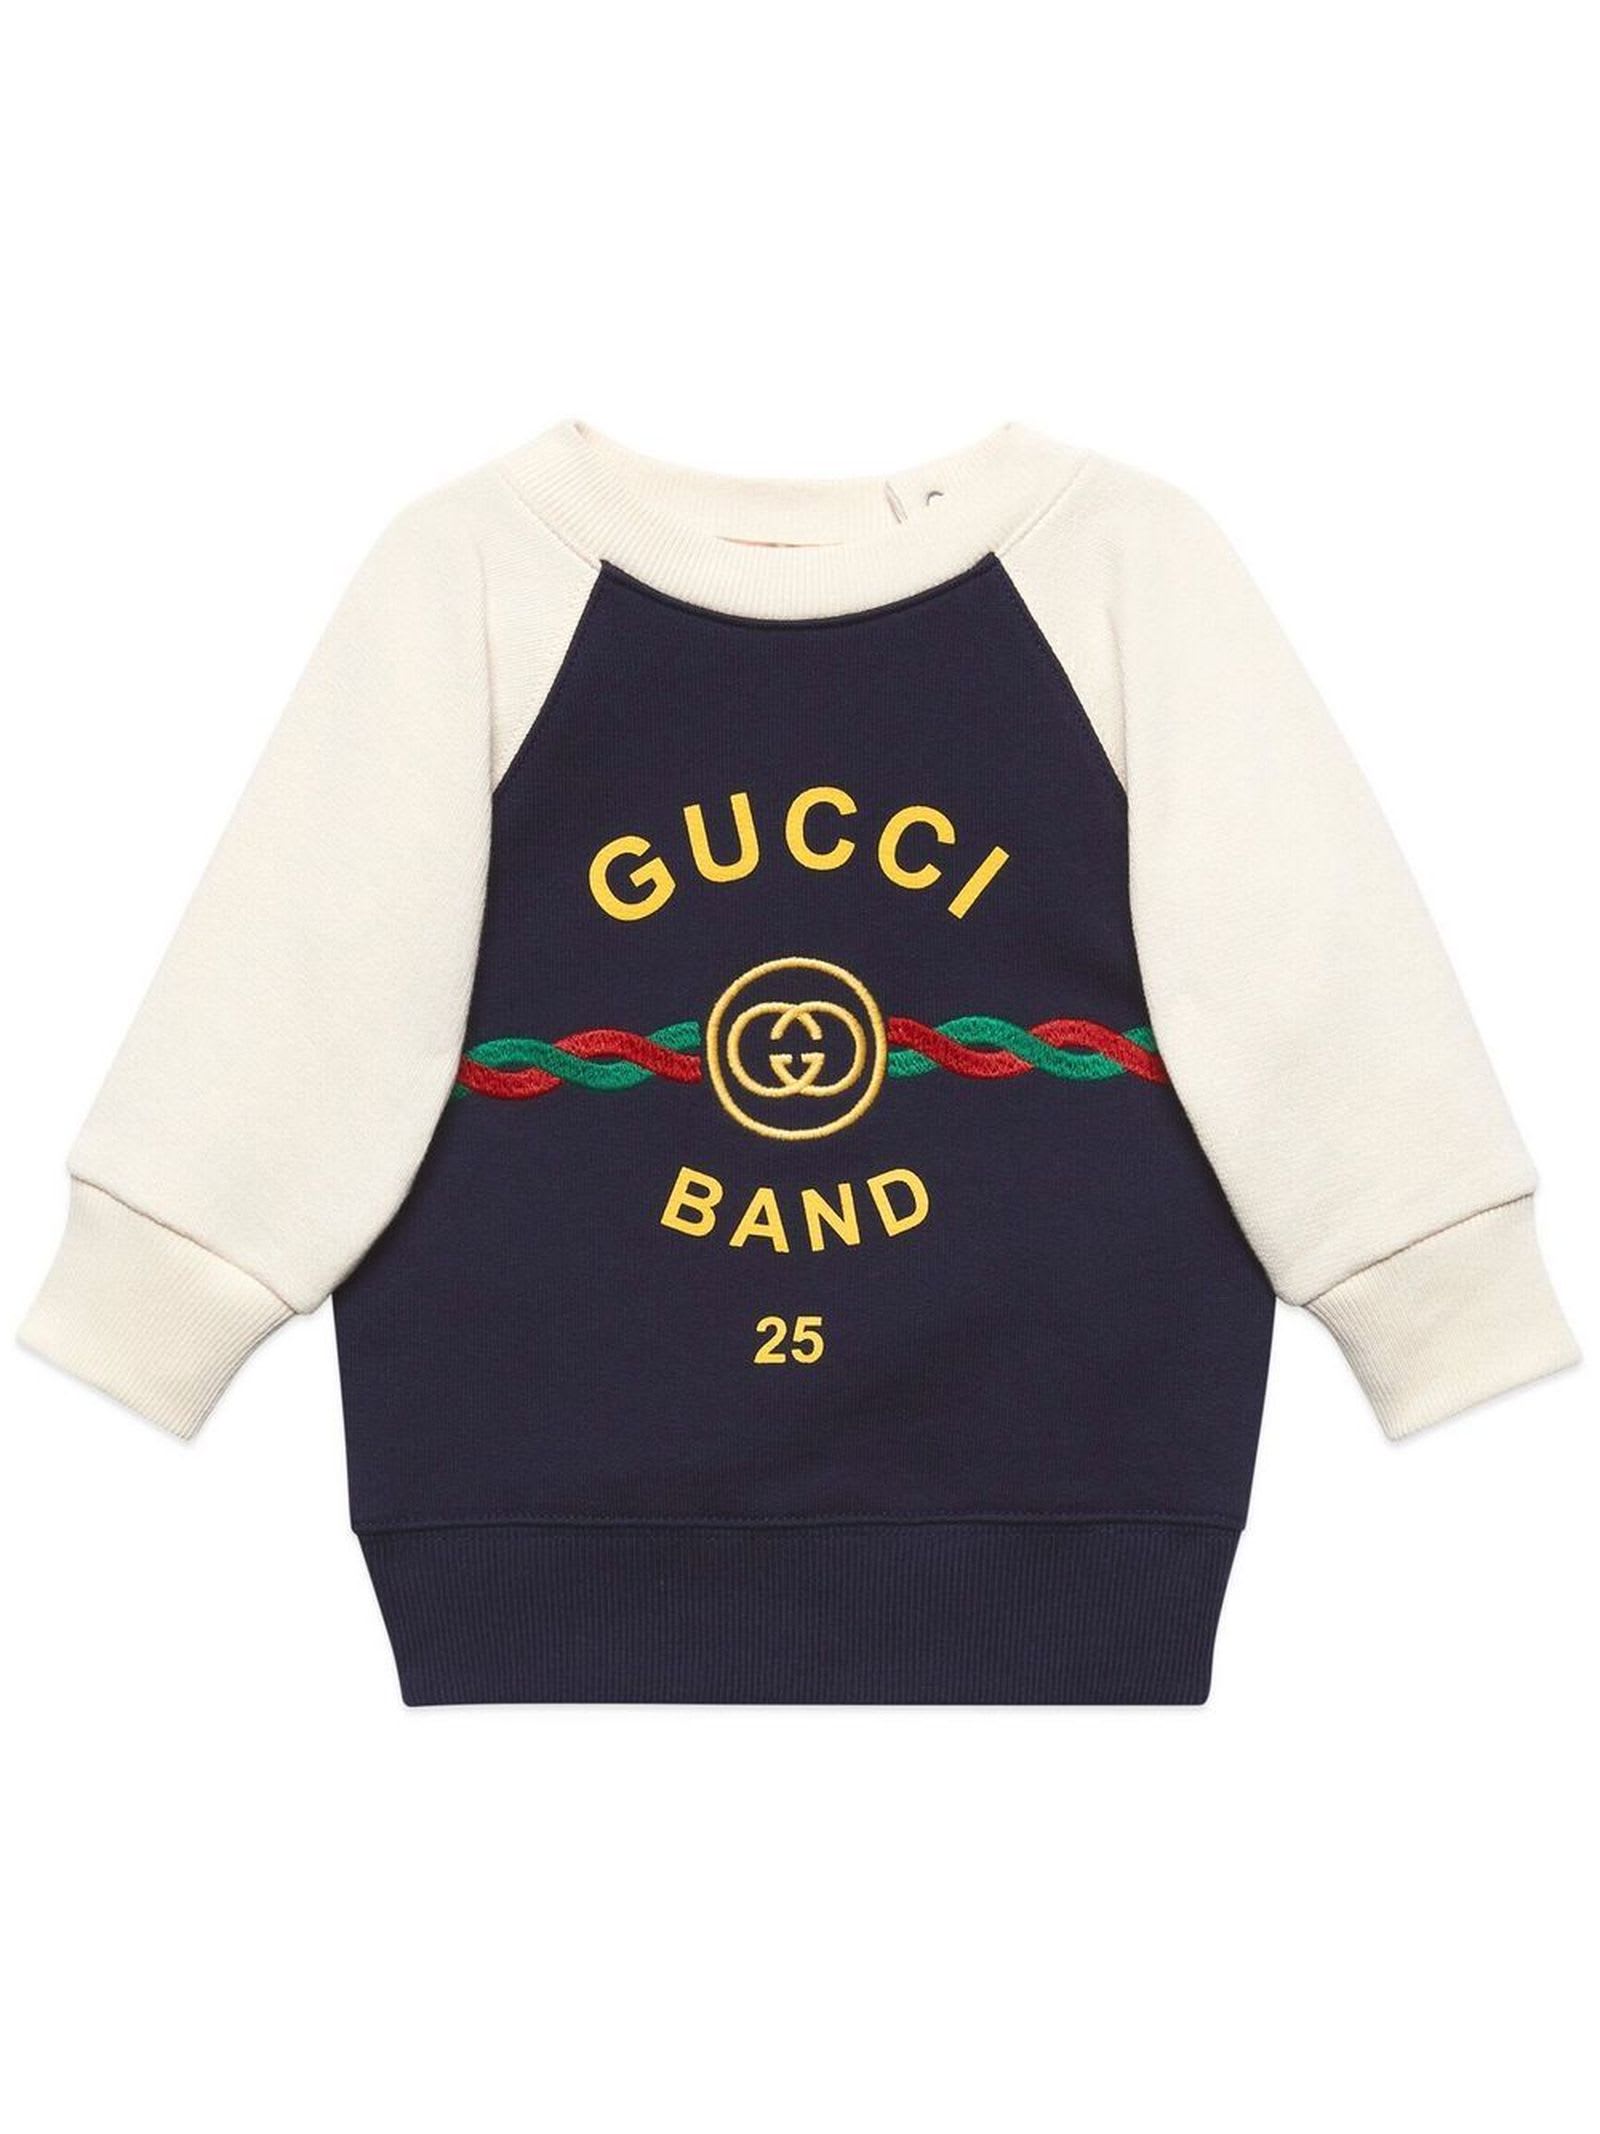 Gucci Blue Cotton Sweatshirt